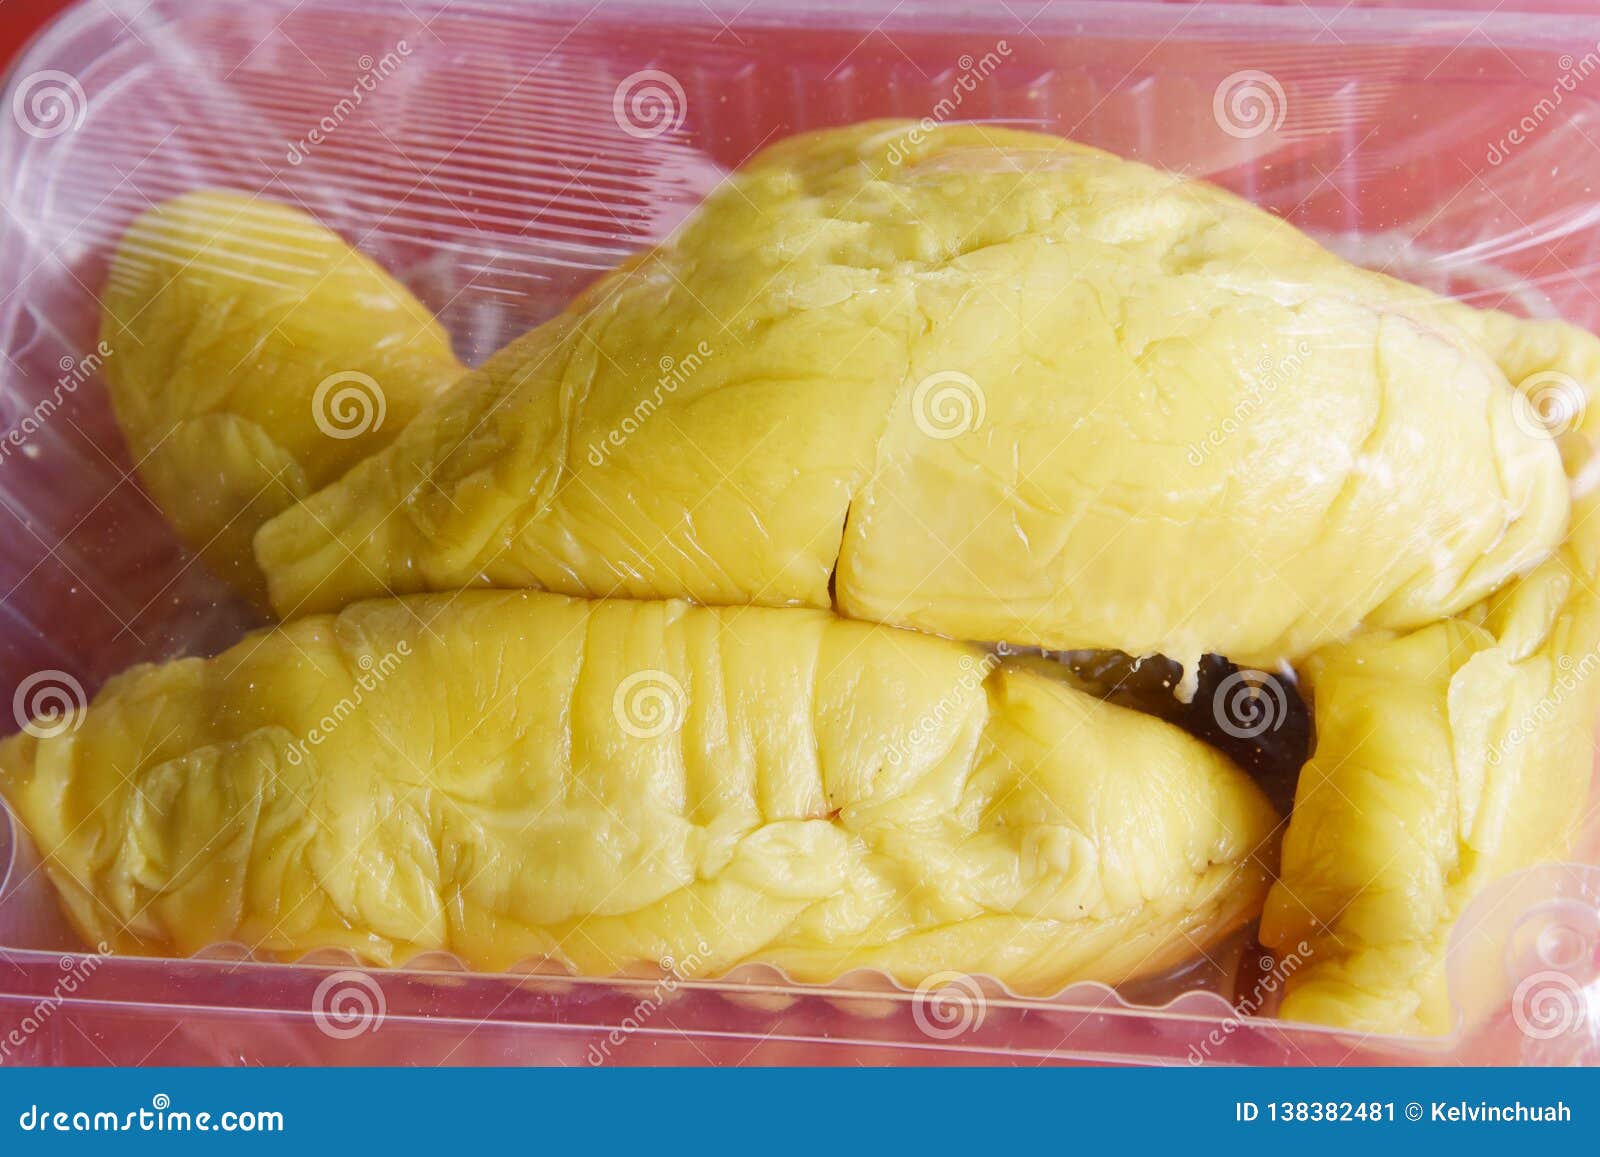 Durian king isi musang SLDB buka